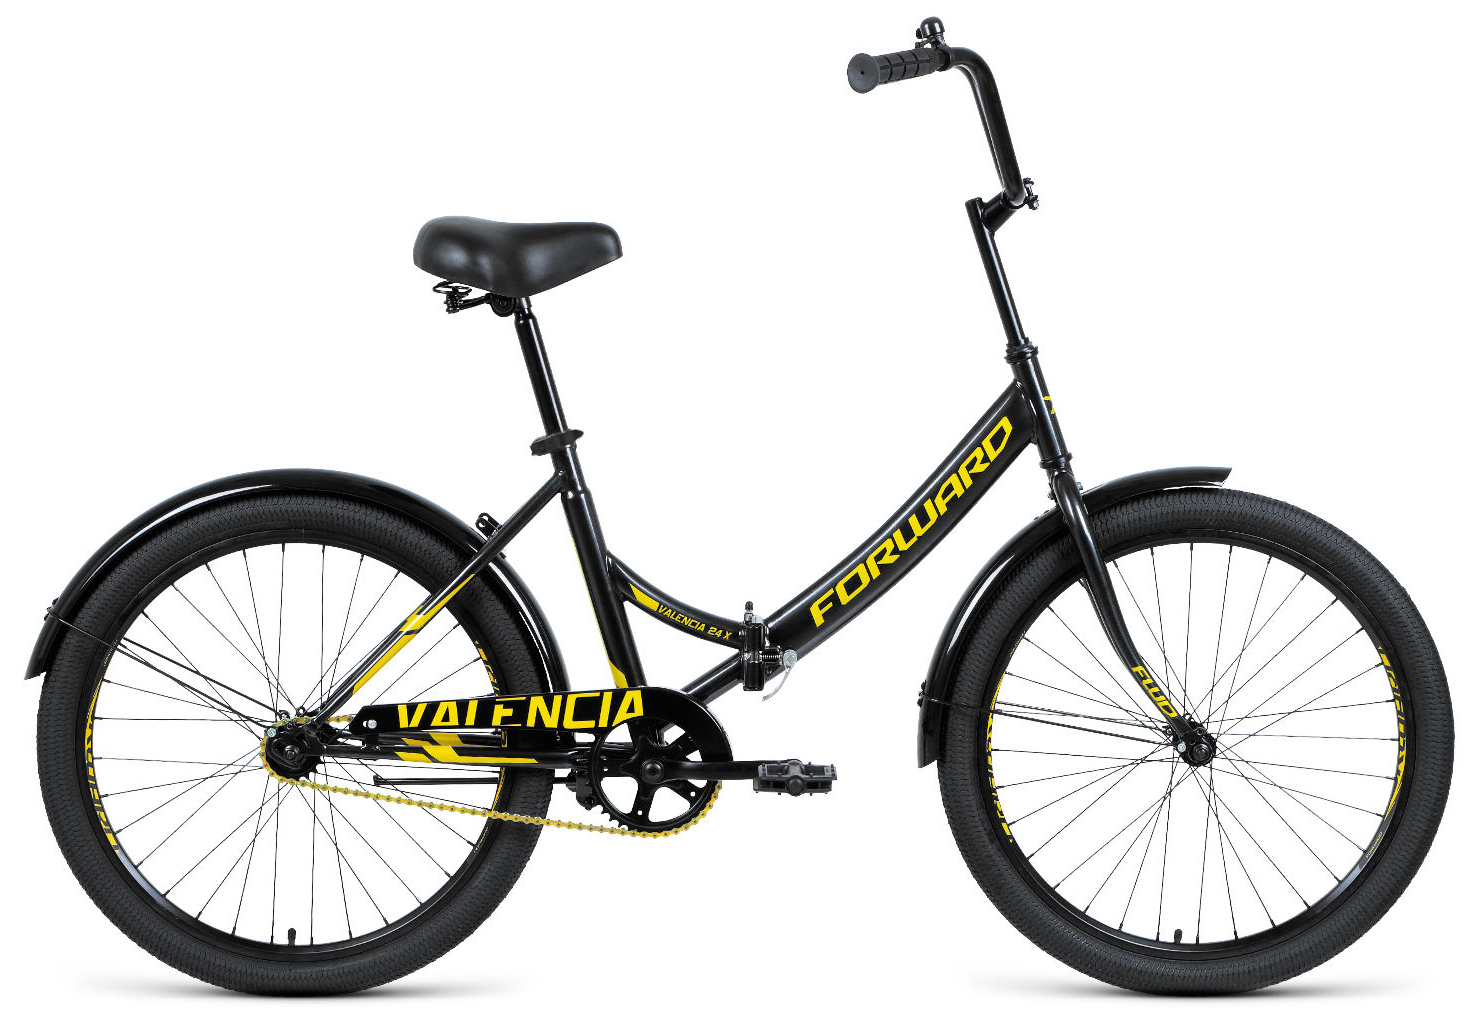  Велосипед Forward Valencia 24 X (2021) 2021